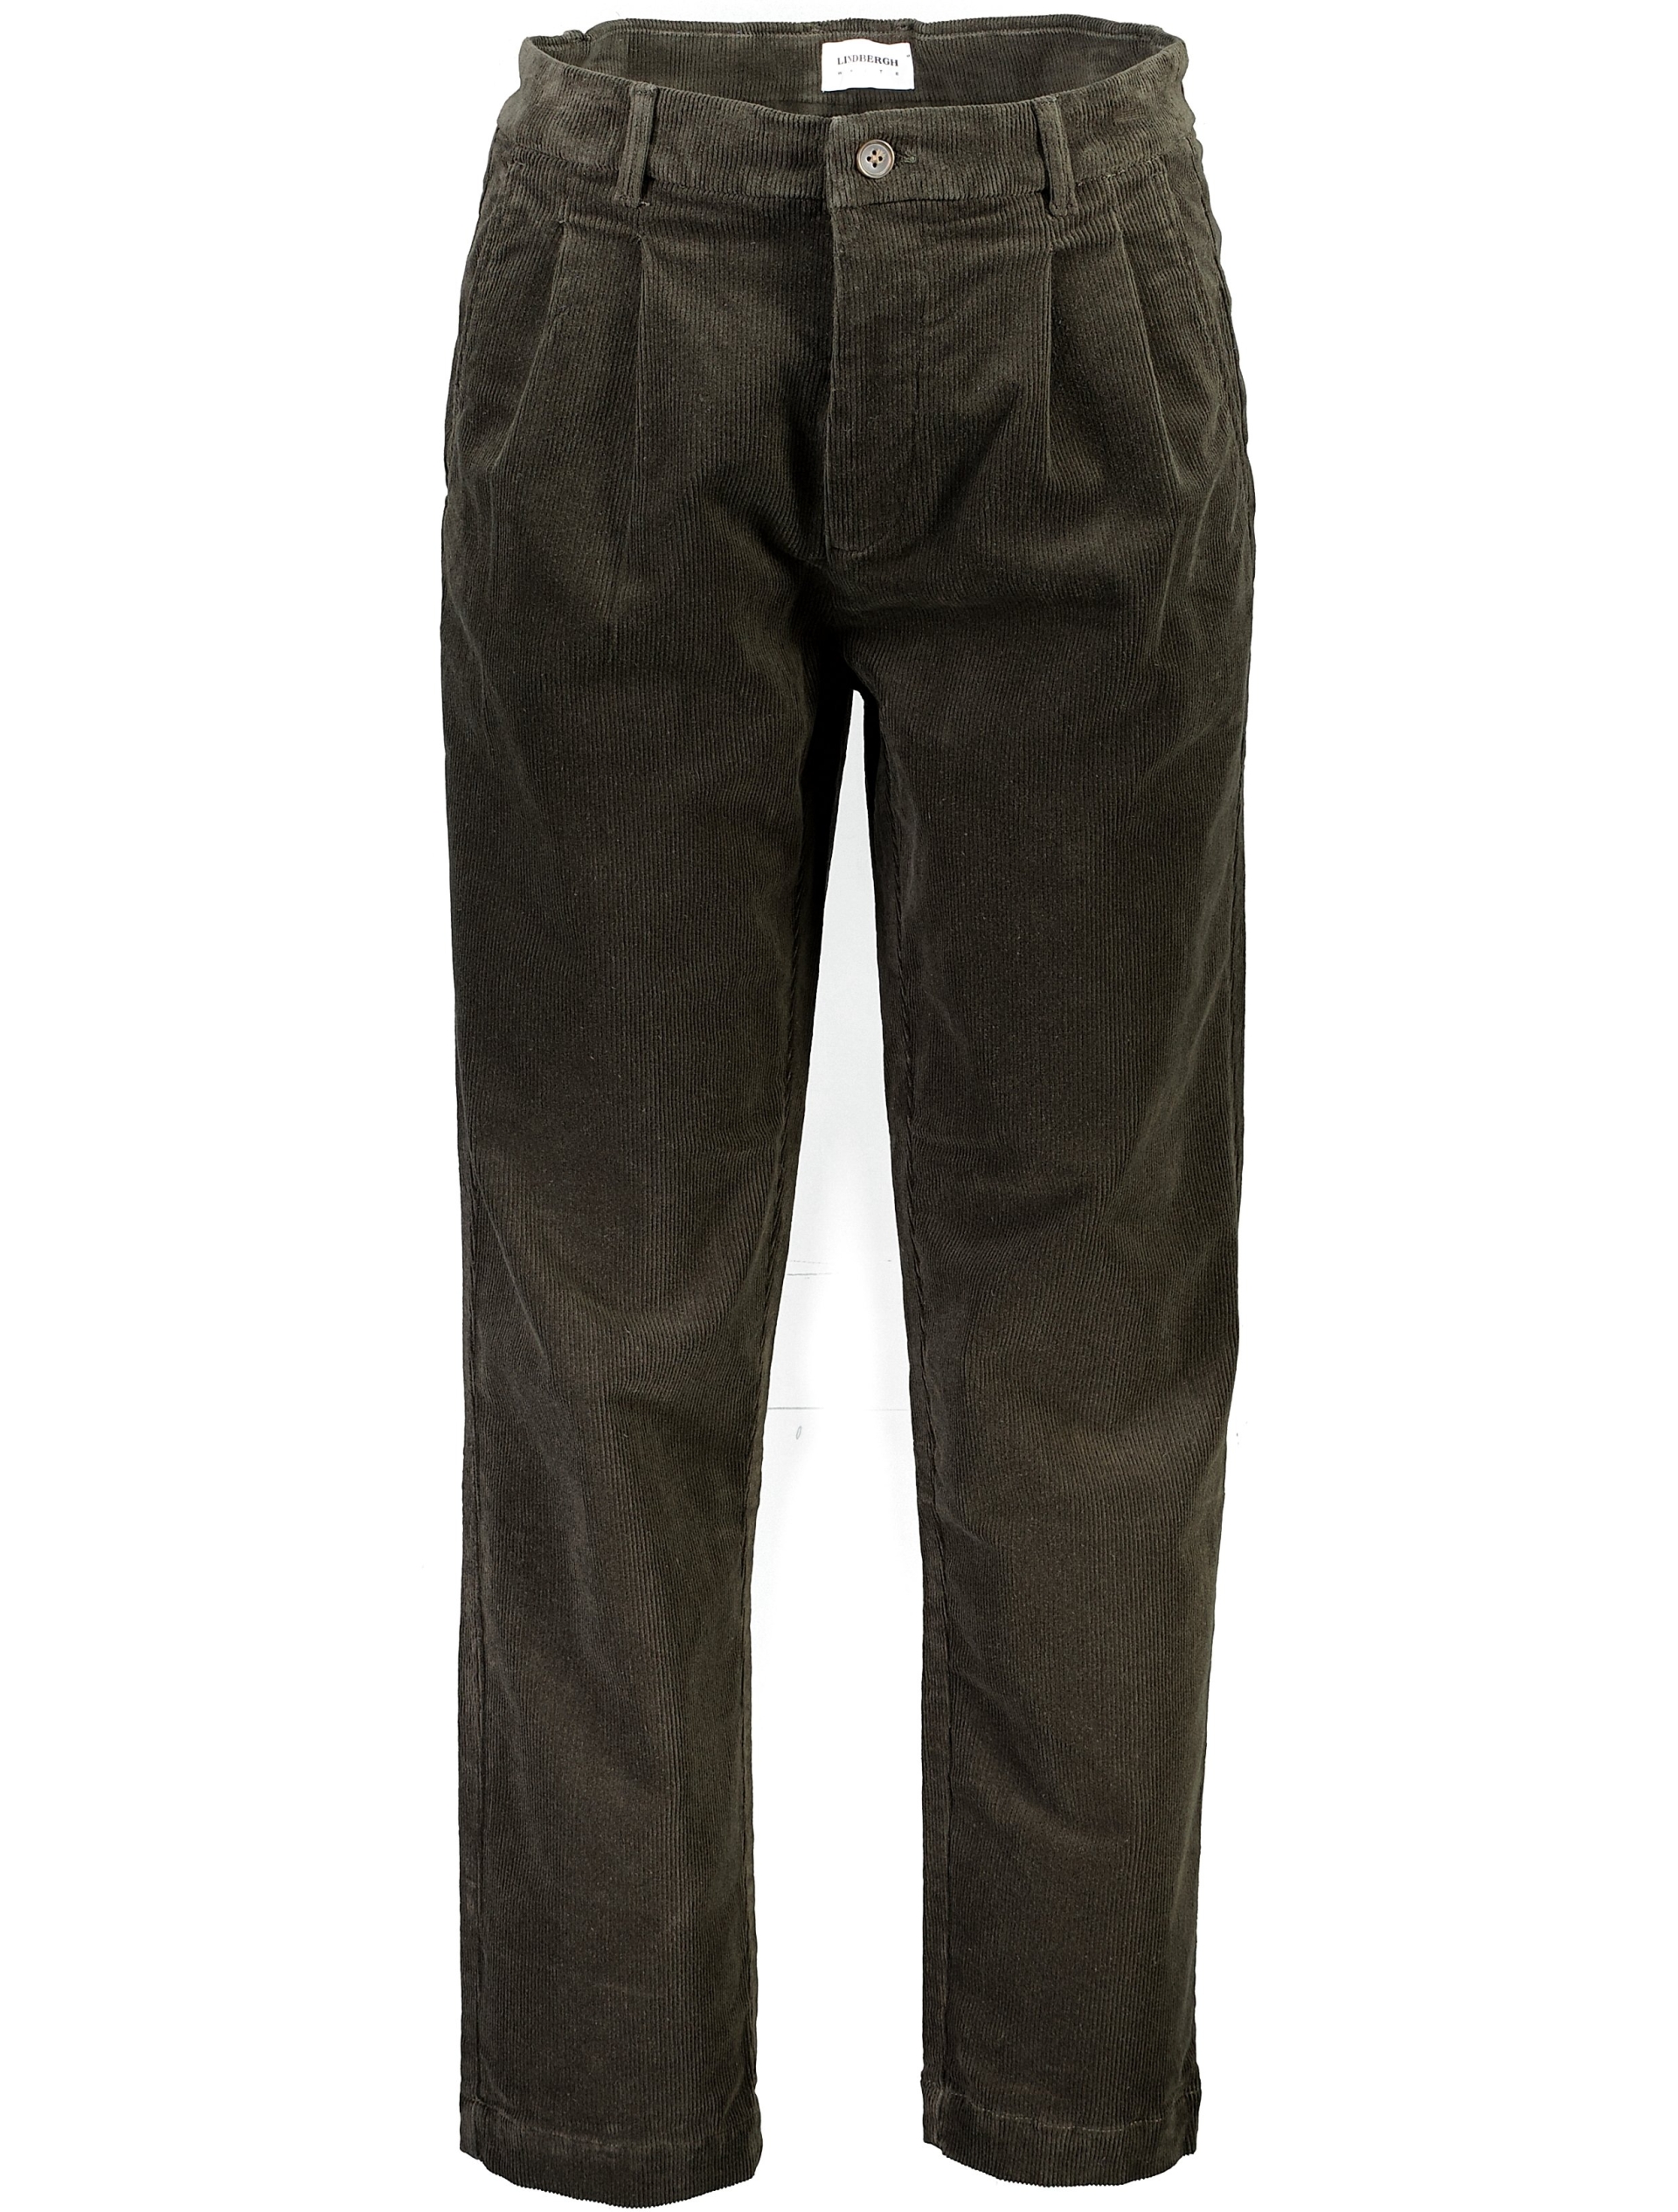 Lindbergh Corduroy trousers green / dk army